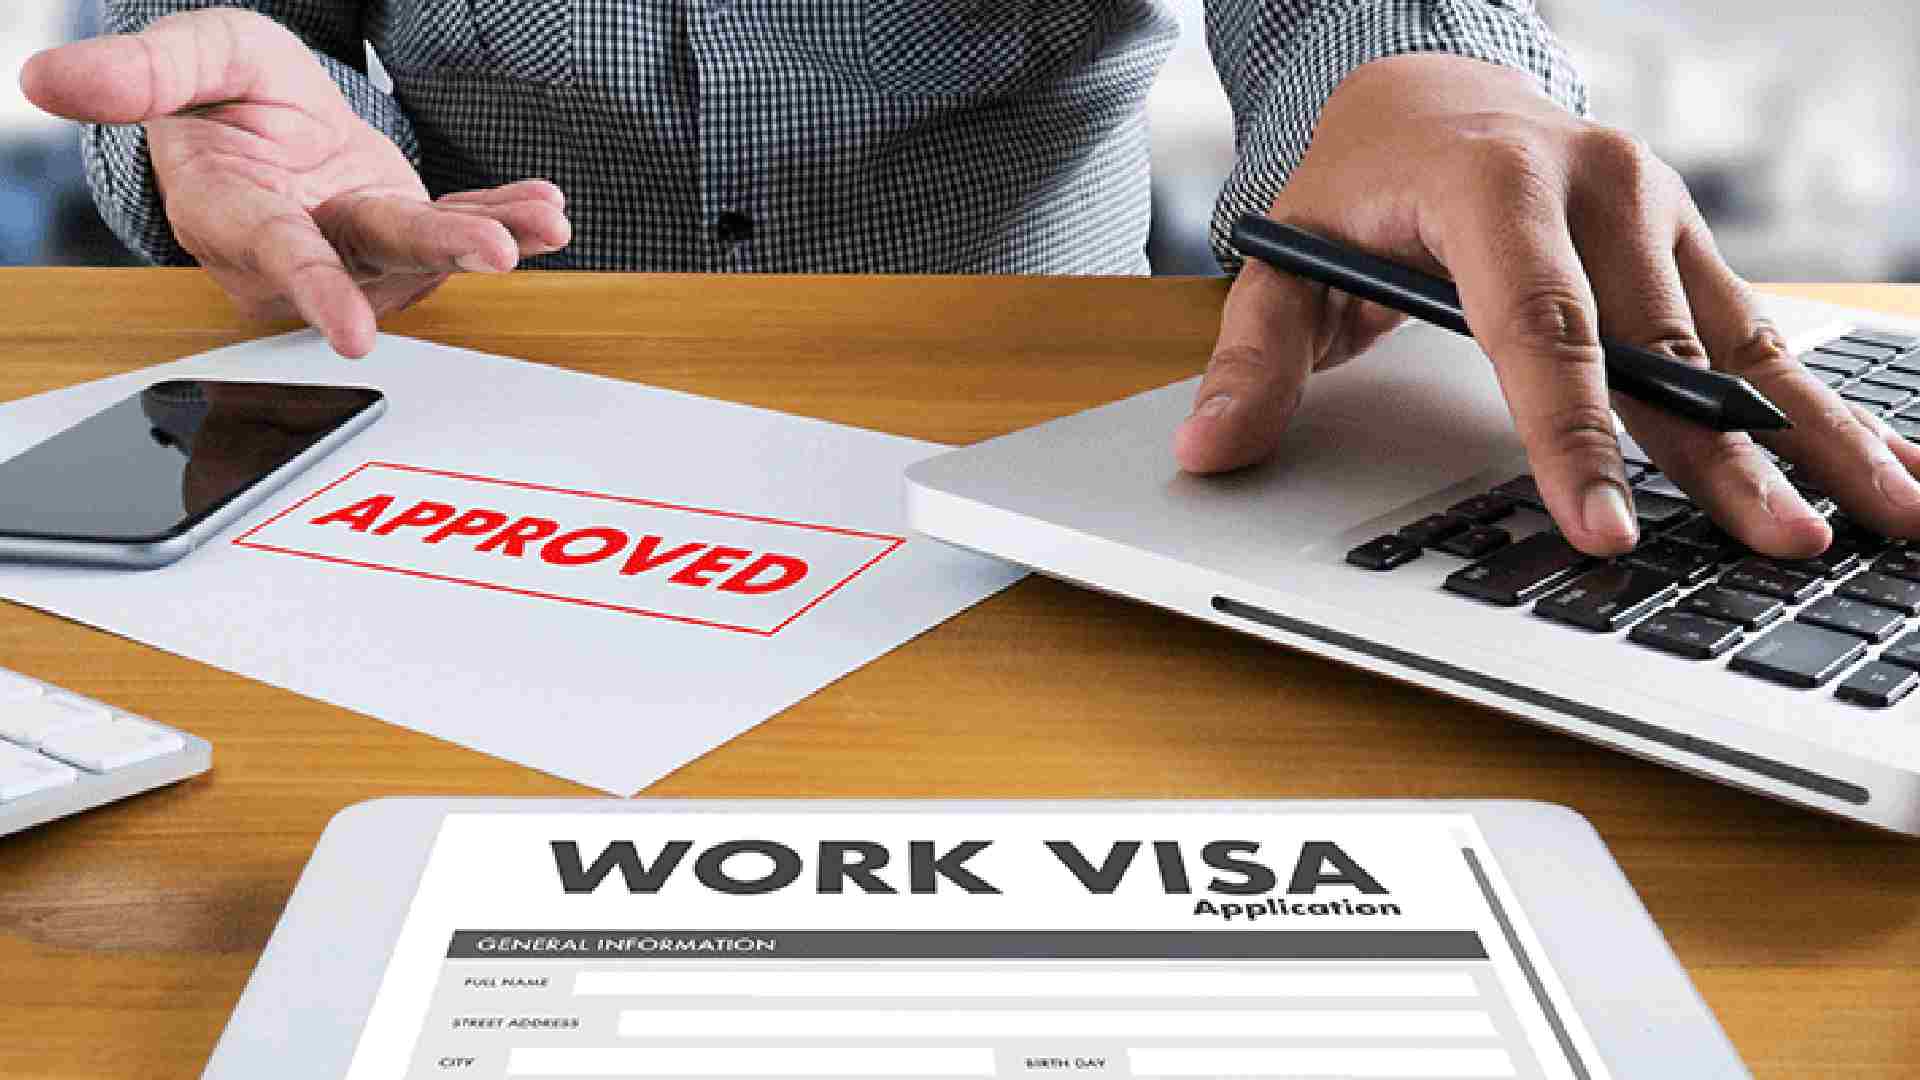 employment visa uae 